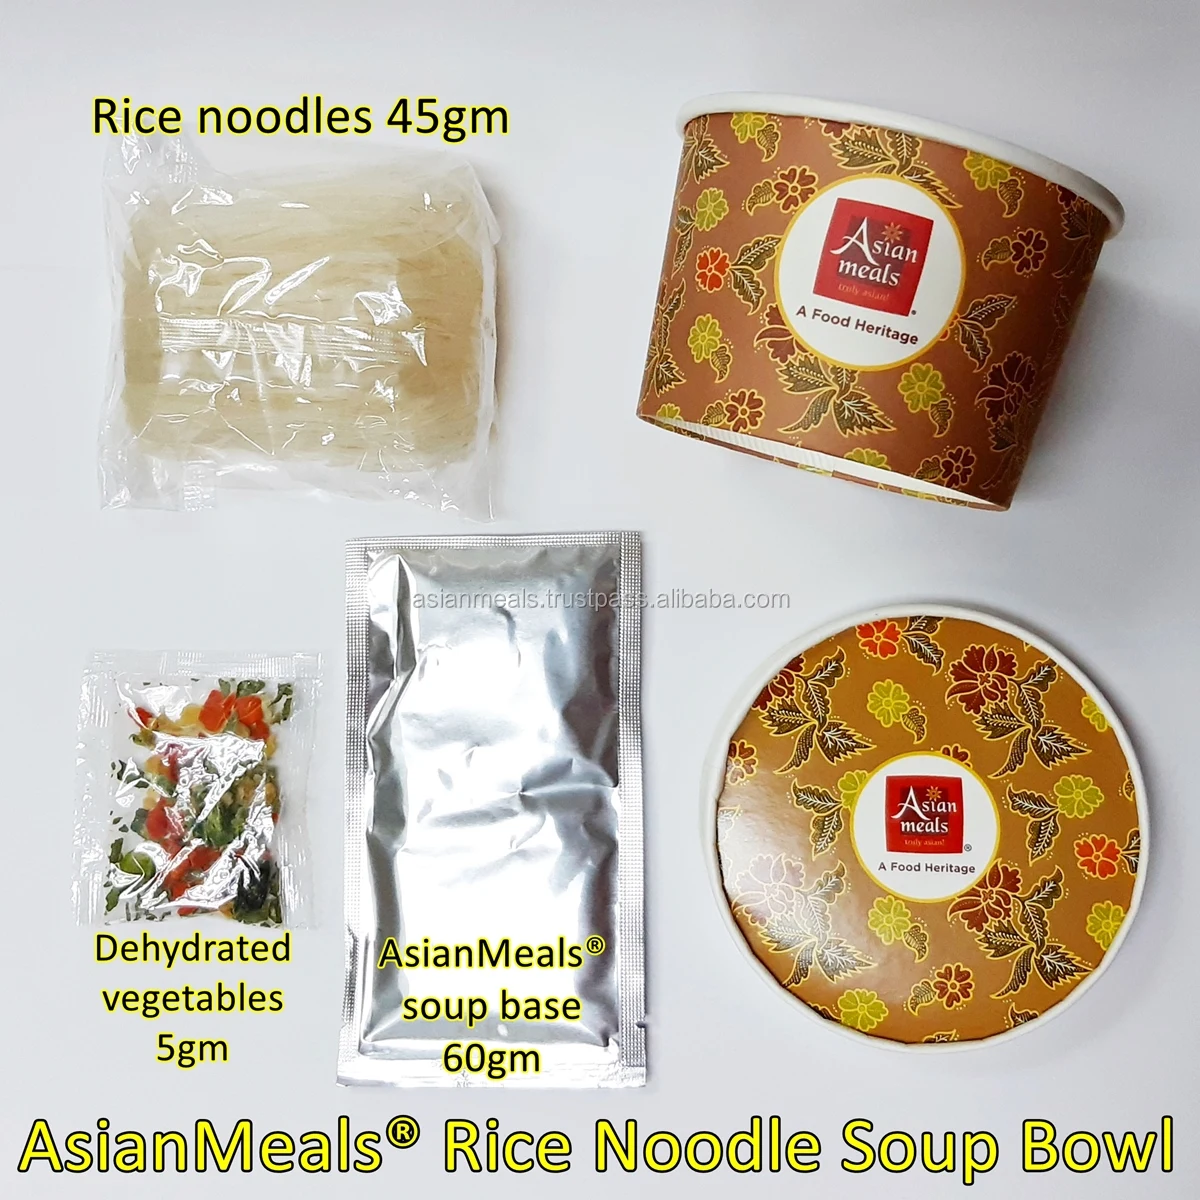 Wholesale Turmeric Coconut Kunyit Masak Lemak Instant Rice Noodle Soup Bowl High Quality Halal Delicious Malaysian